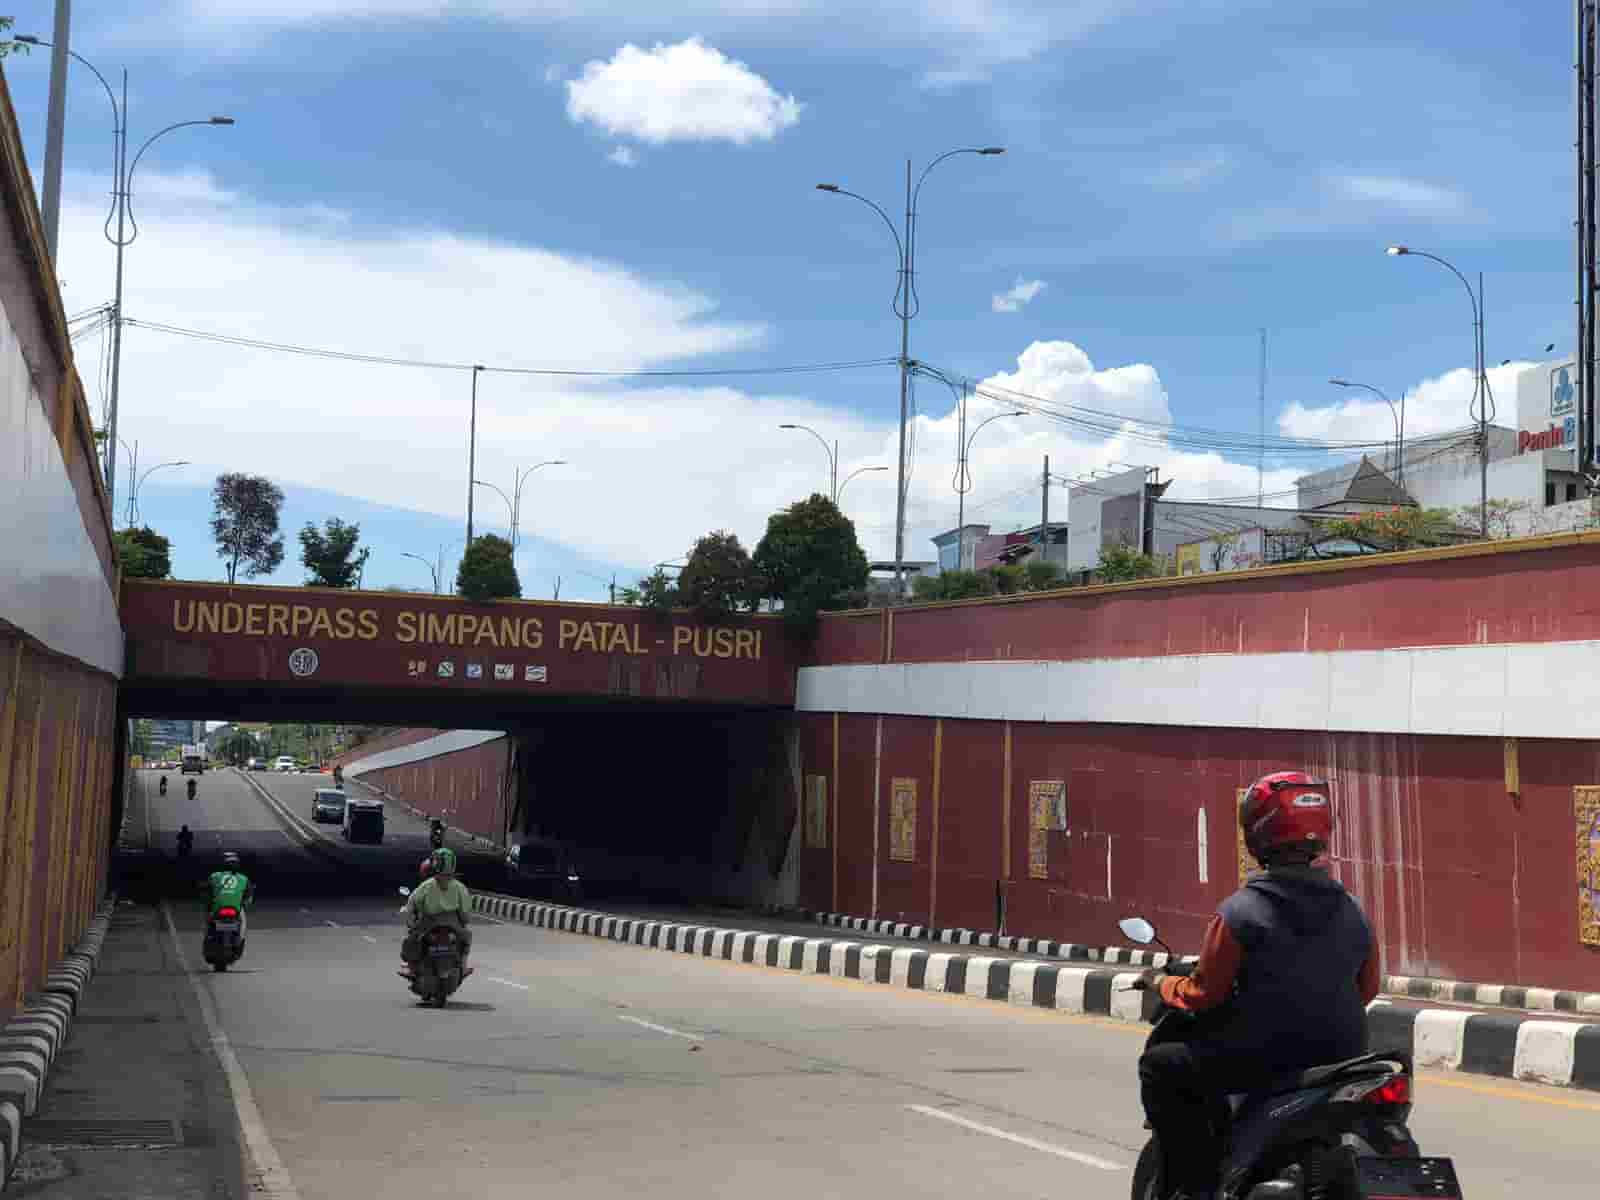 Pemkot Palembang Terkesan Acuh, Begini Kondisi Underpass Simpang Patal-Pusri Sekarang!